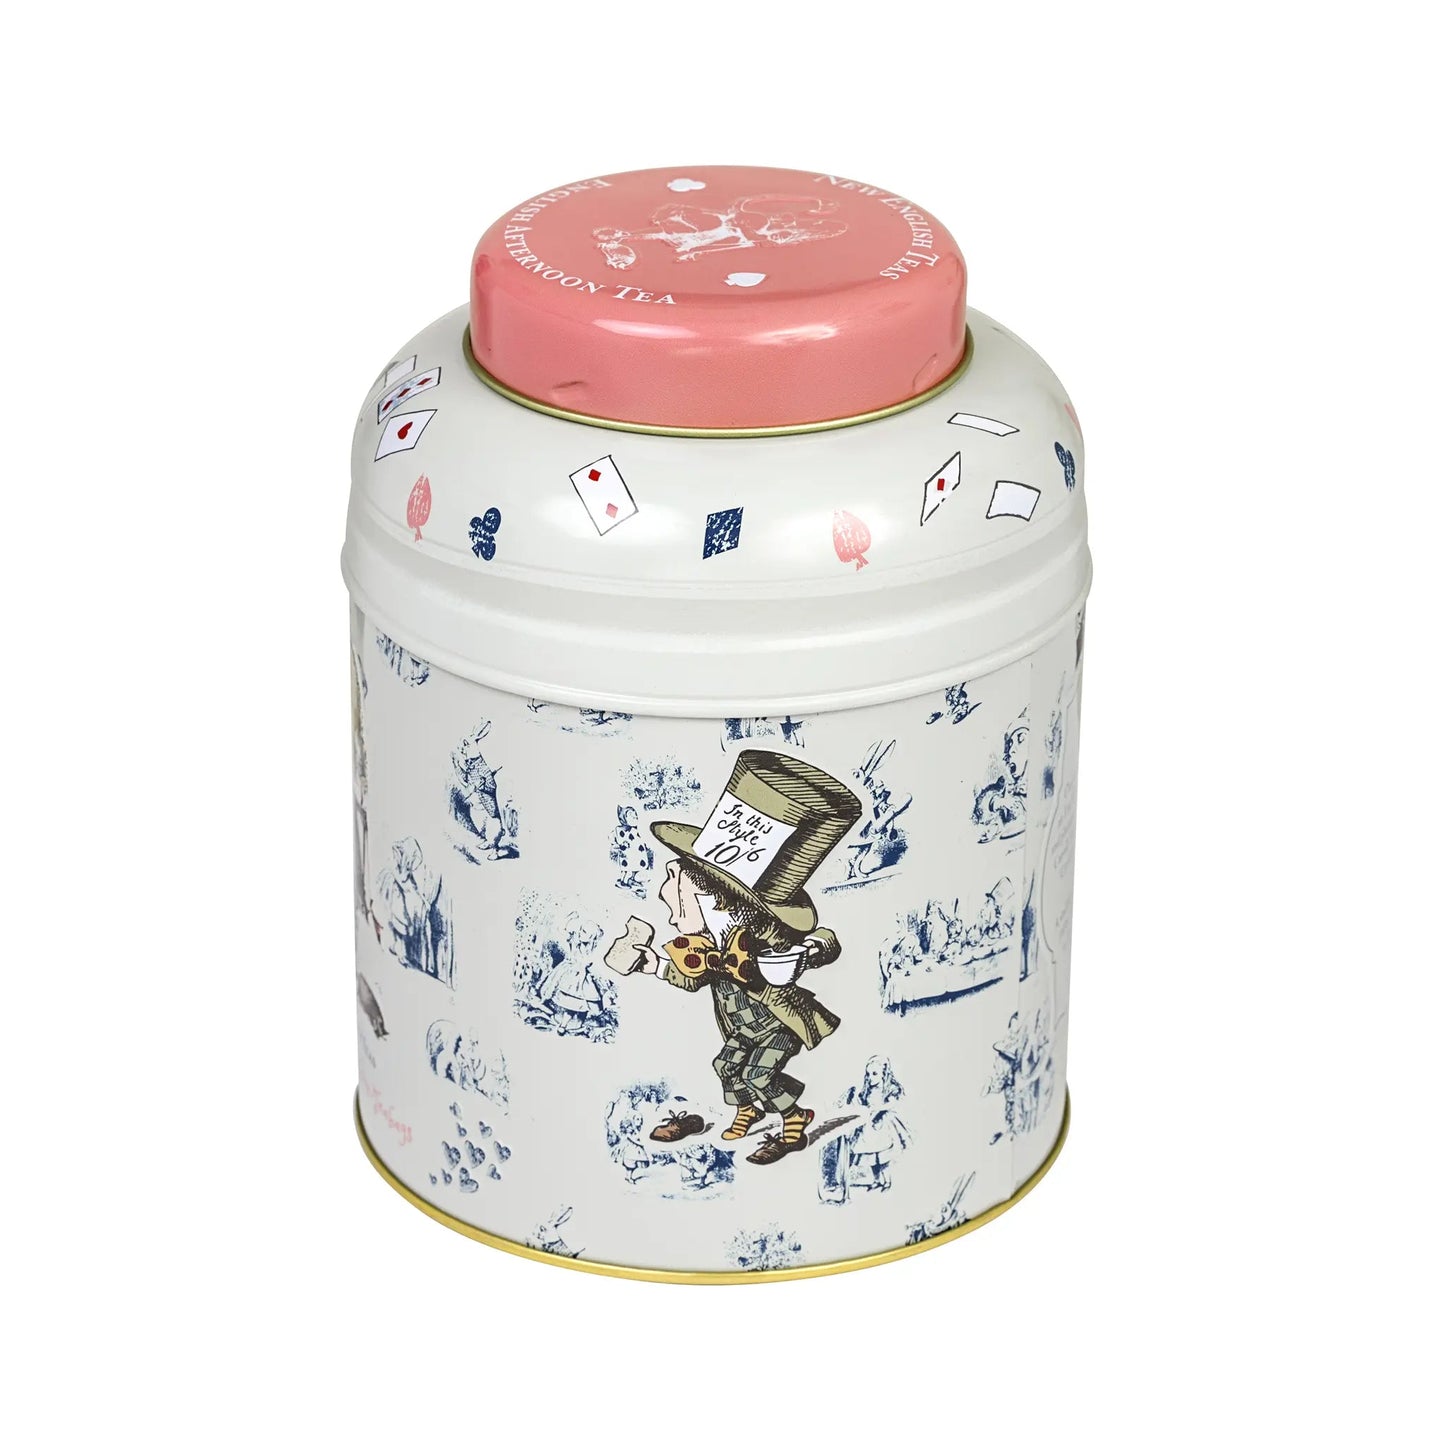 Alice in Wonderland Flamingo Tea Caddy Tea Tins New English Teas 